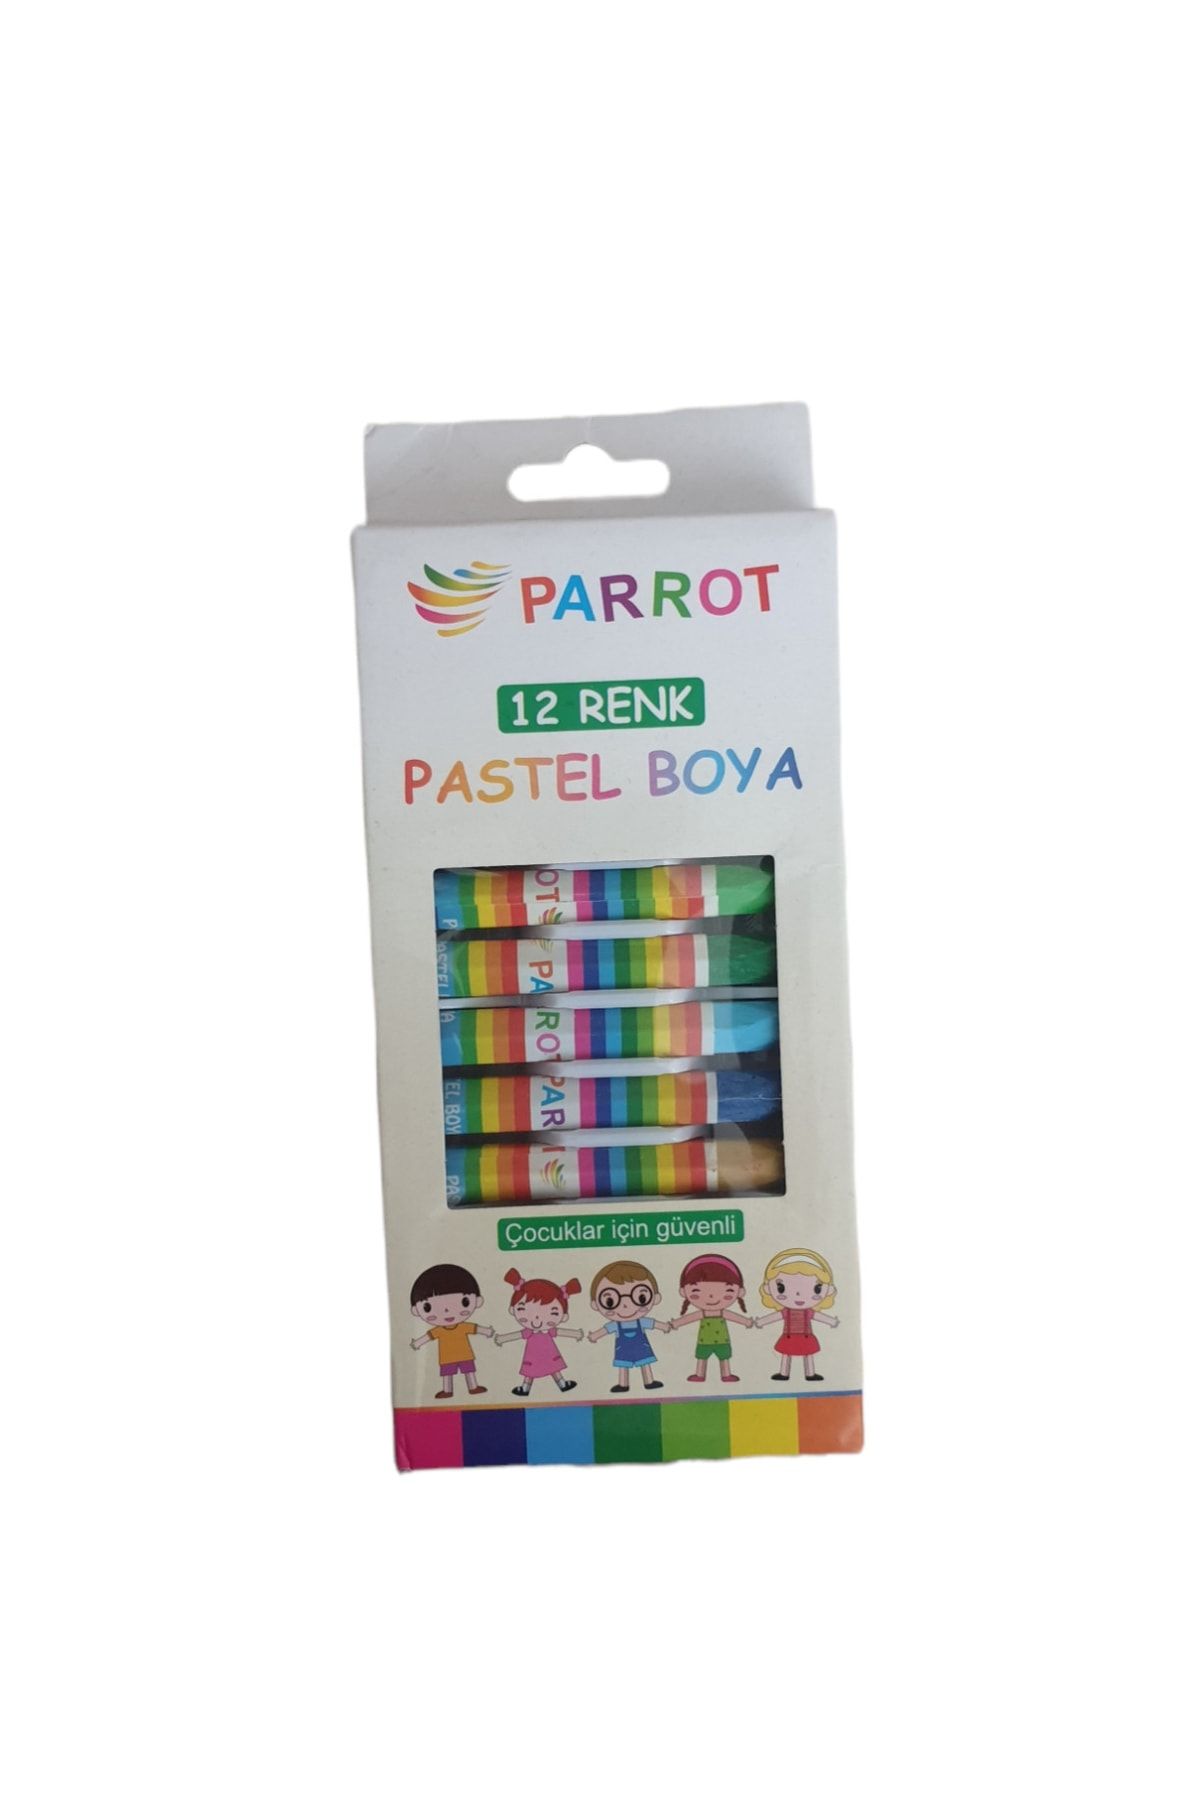 Parrot Pastel Boya 12 Renk